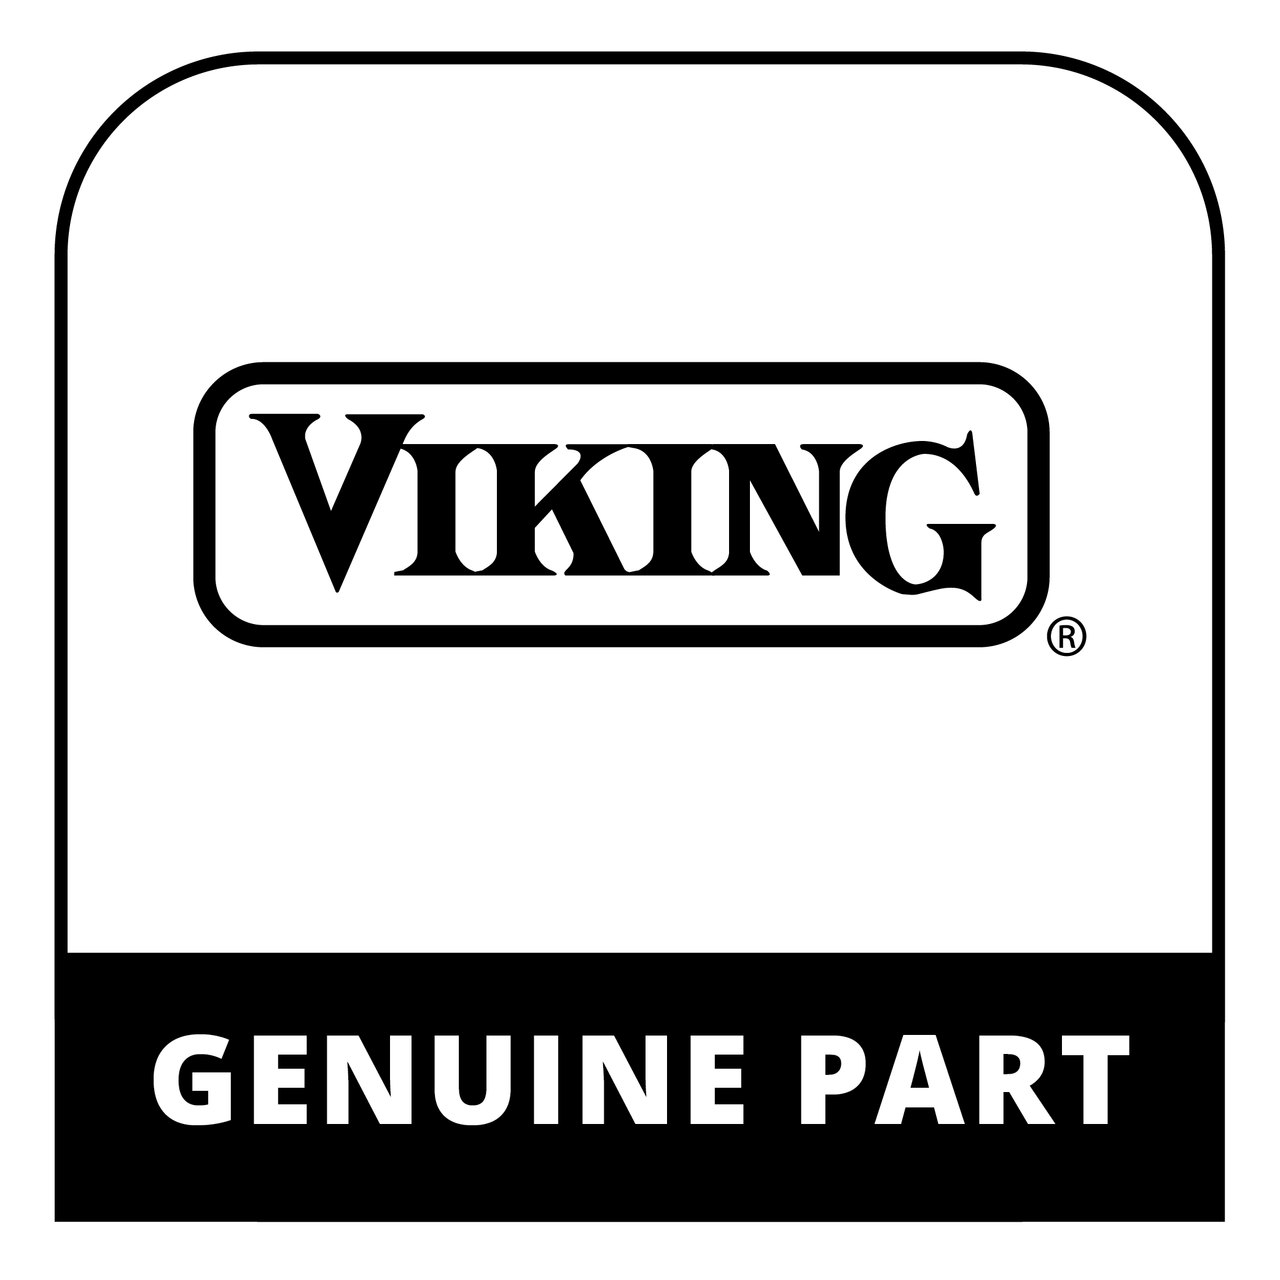 Viking LX10060 - Top/Bottom Door Frame 27 - Genuine Viking Part